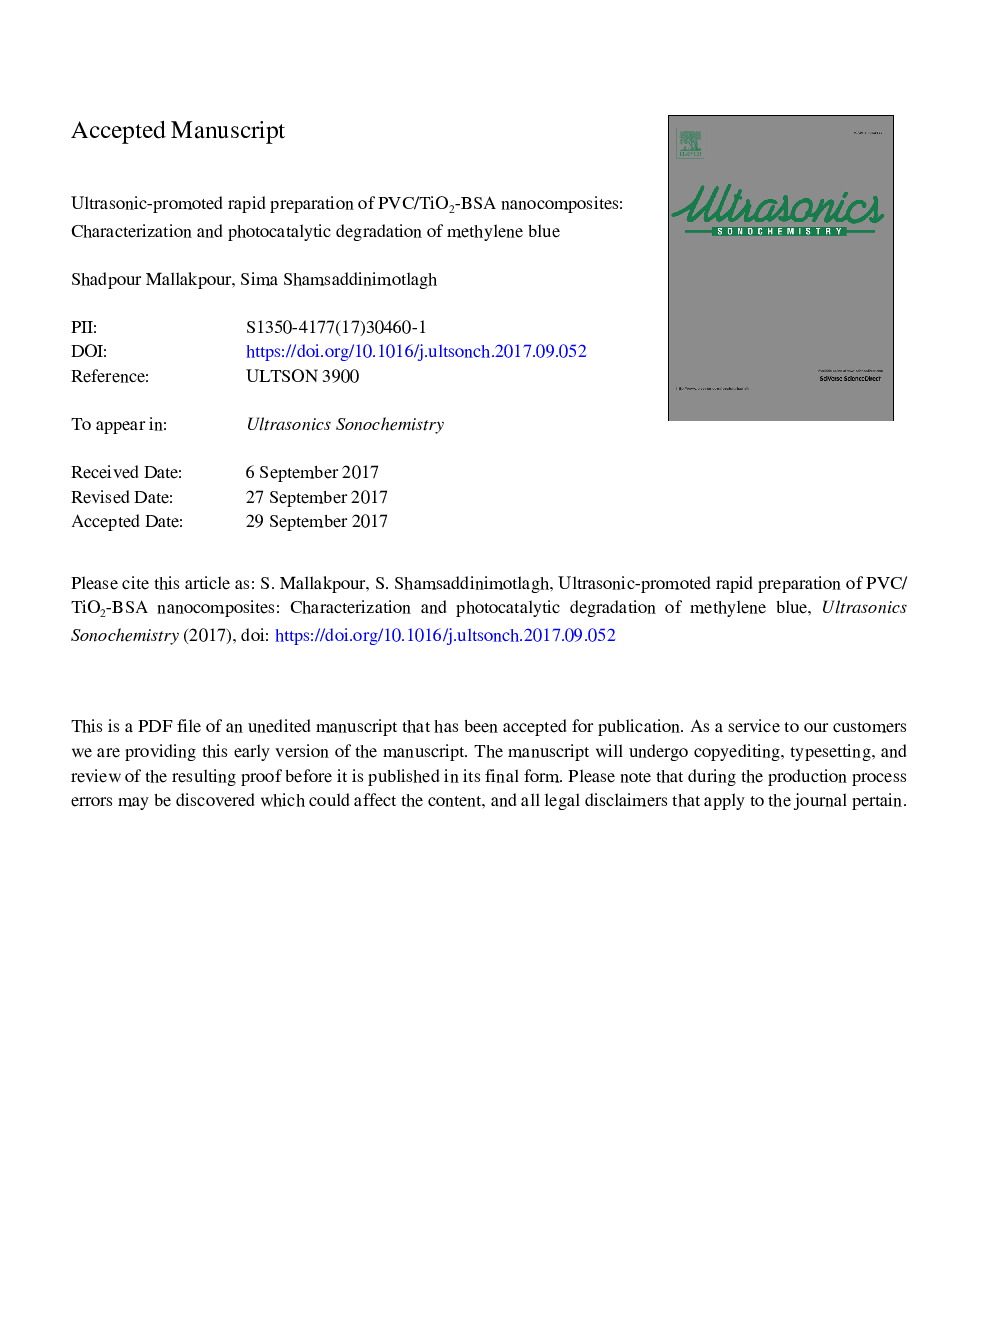 Ultrasonic-promoted rapid preparation of PVC/TiO2-BSA nanocomposites: Characterization and photocatalytic degradation of methylene blue